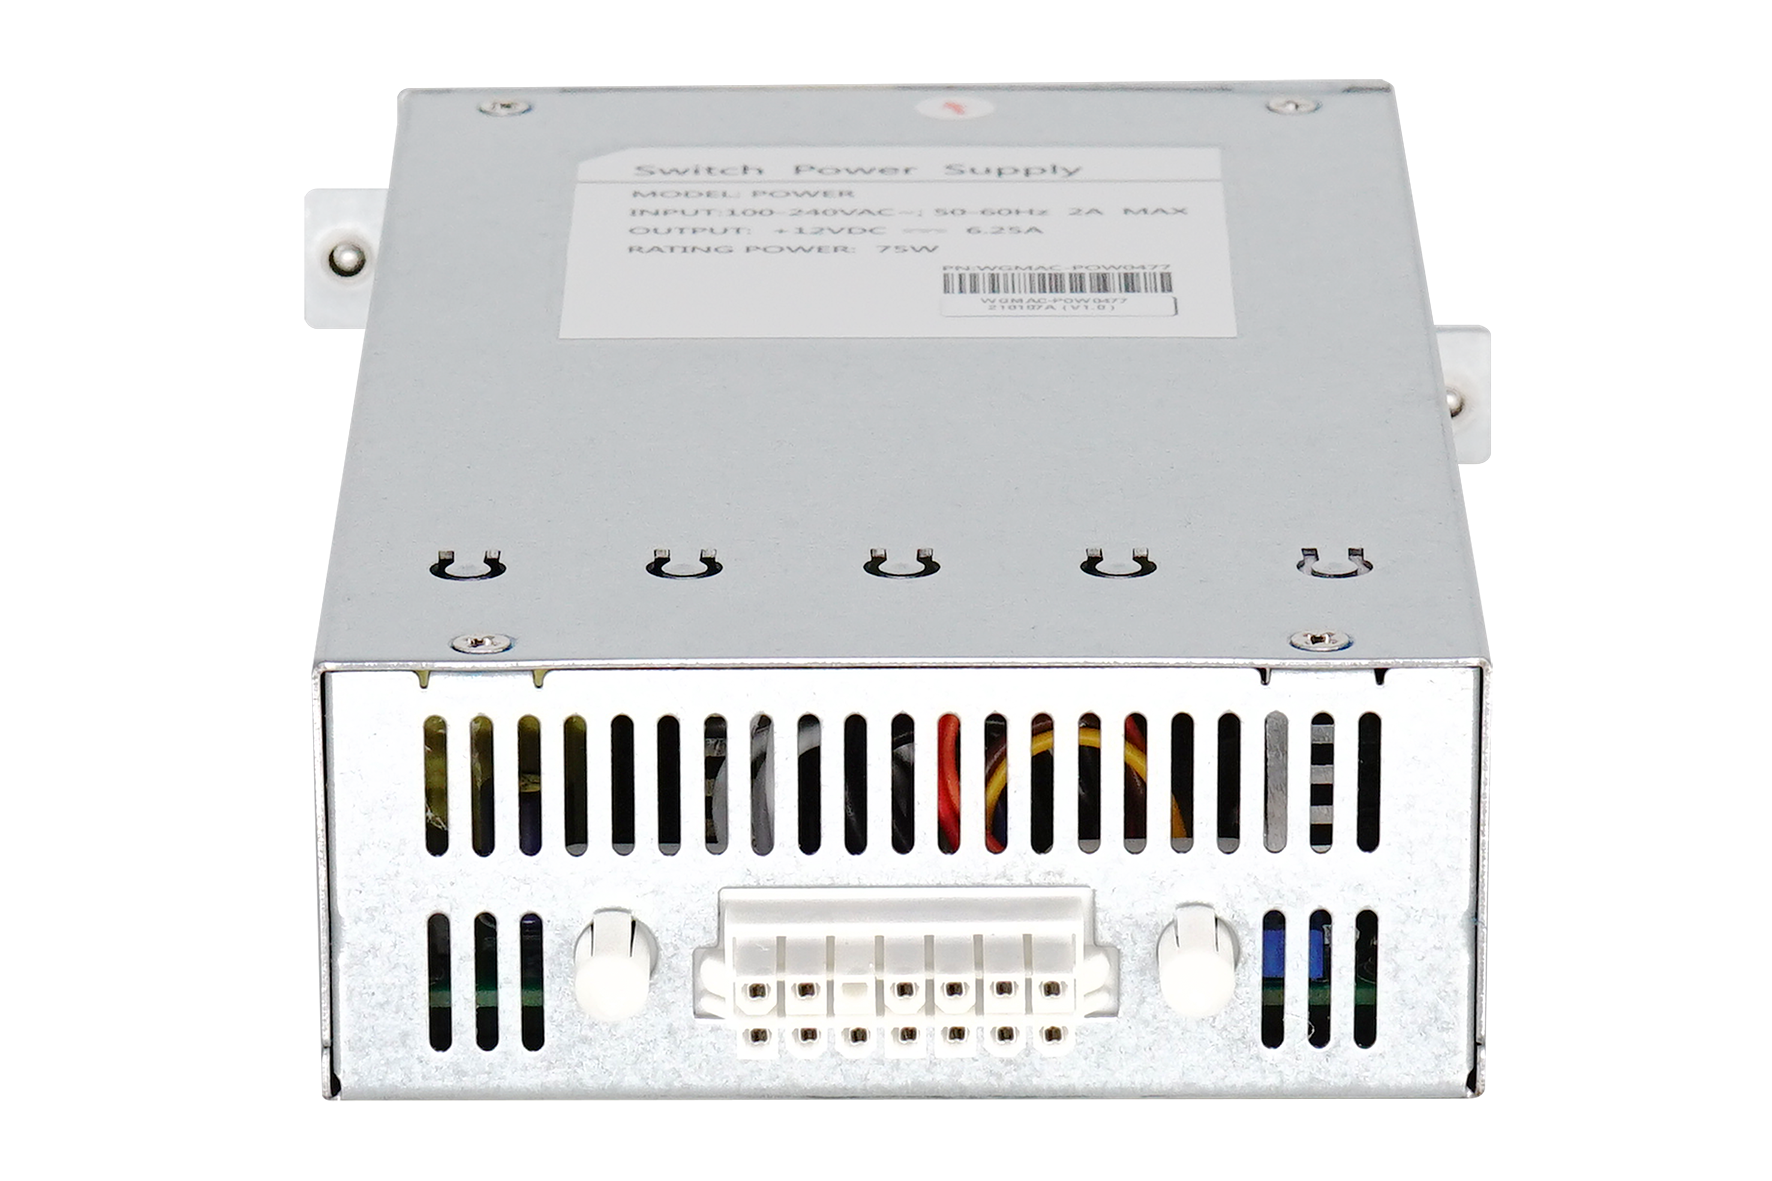 BDCOM AC power supply of S3700 series (Input voltage: 100-240V AC, Maximum power consumption: 75W)